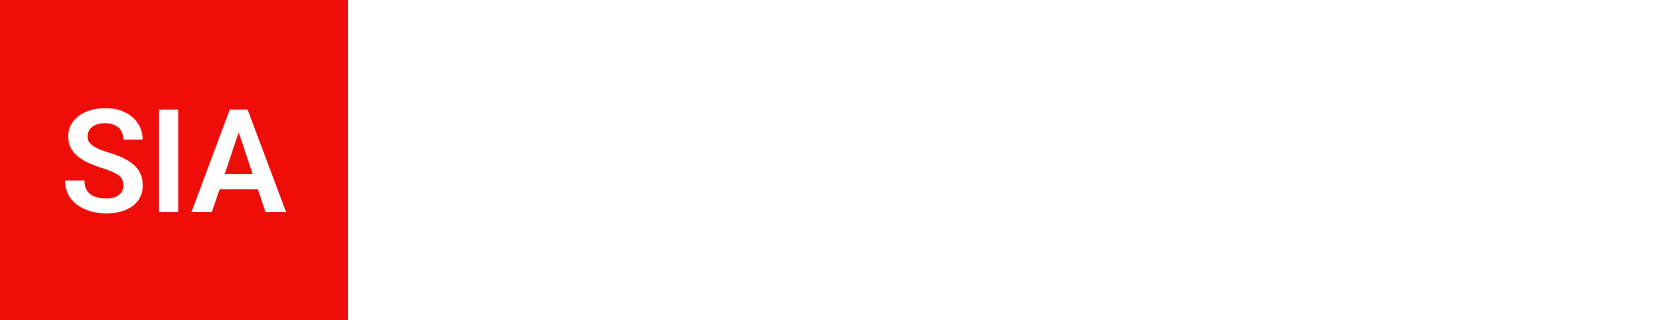 sia engineering logo